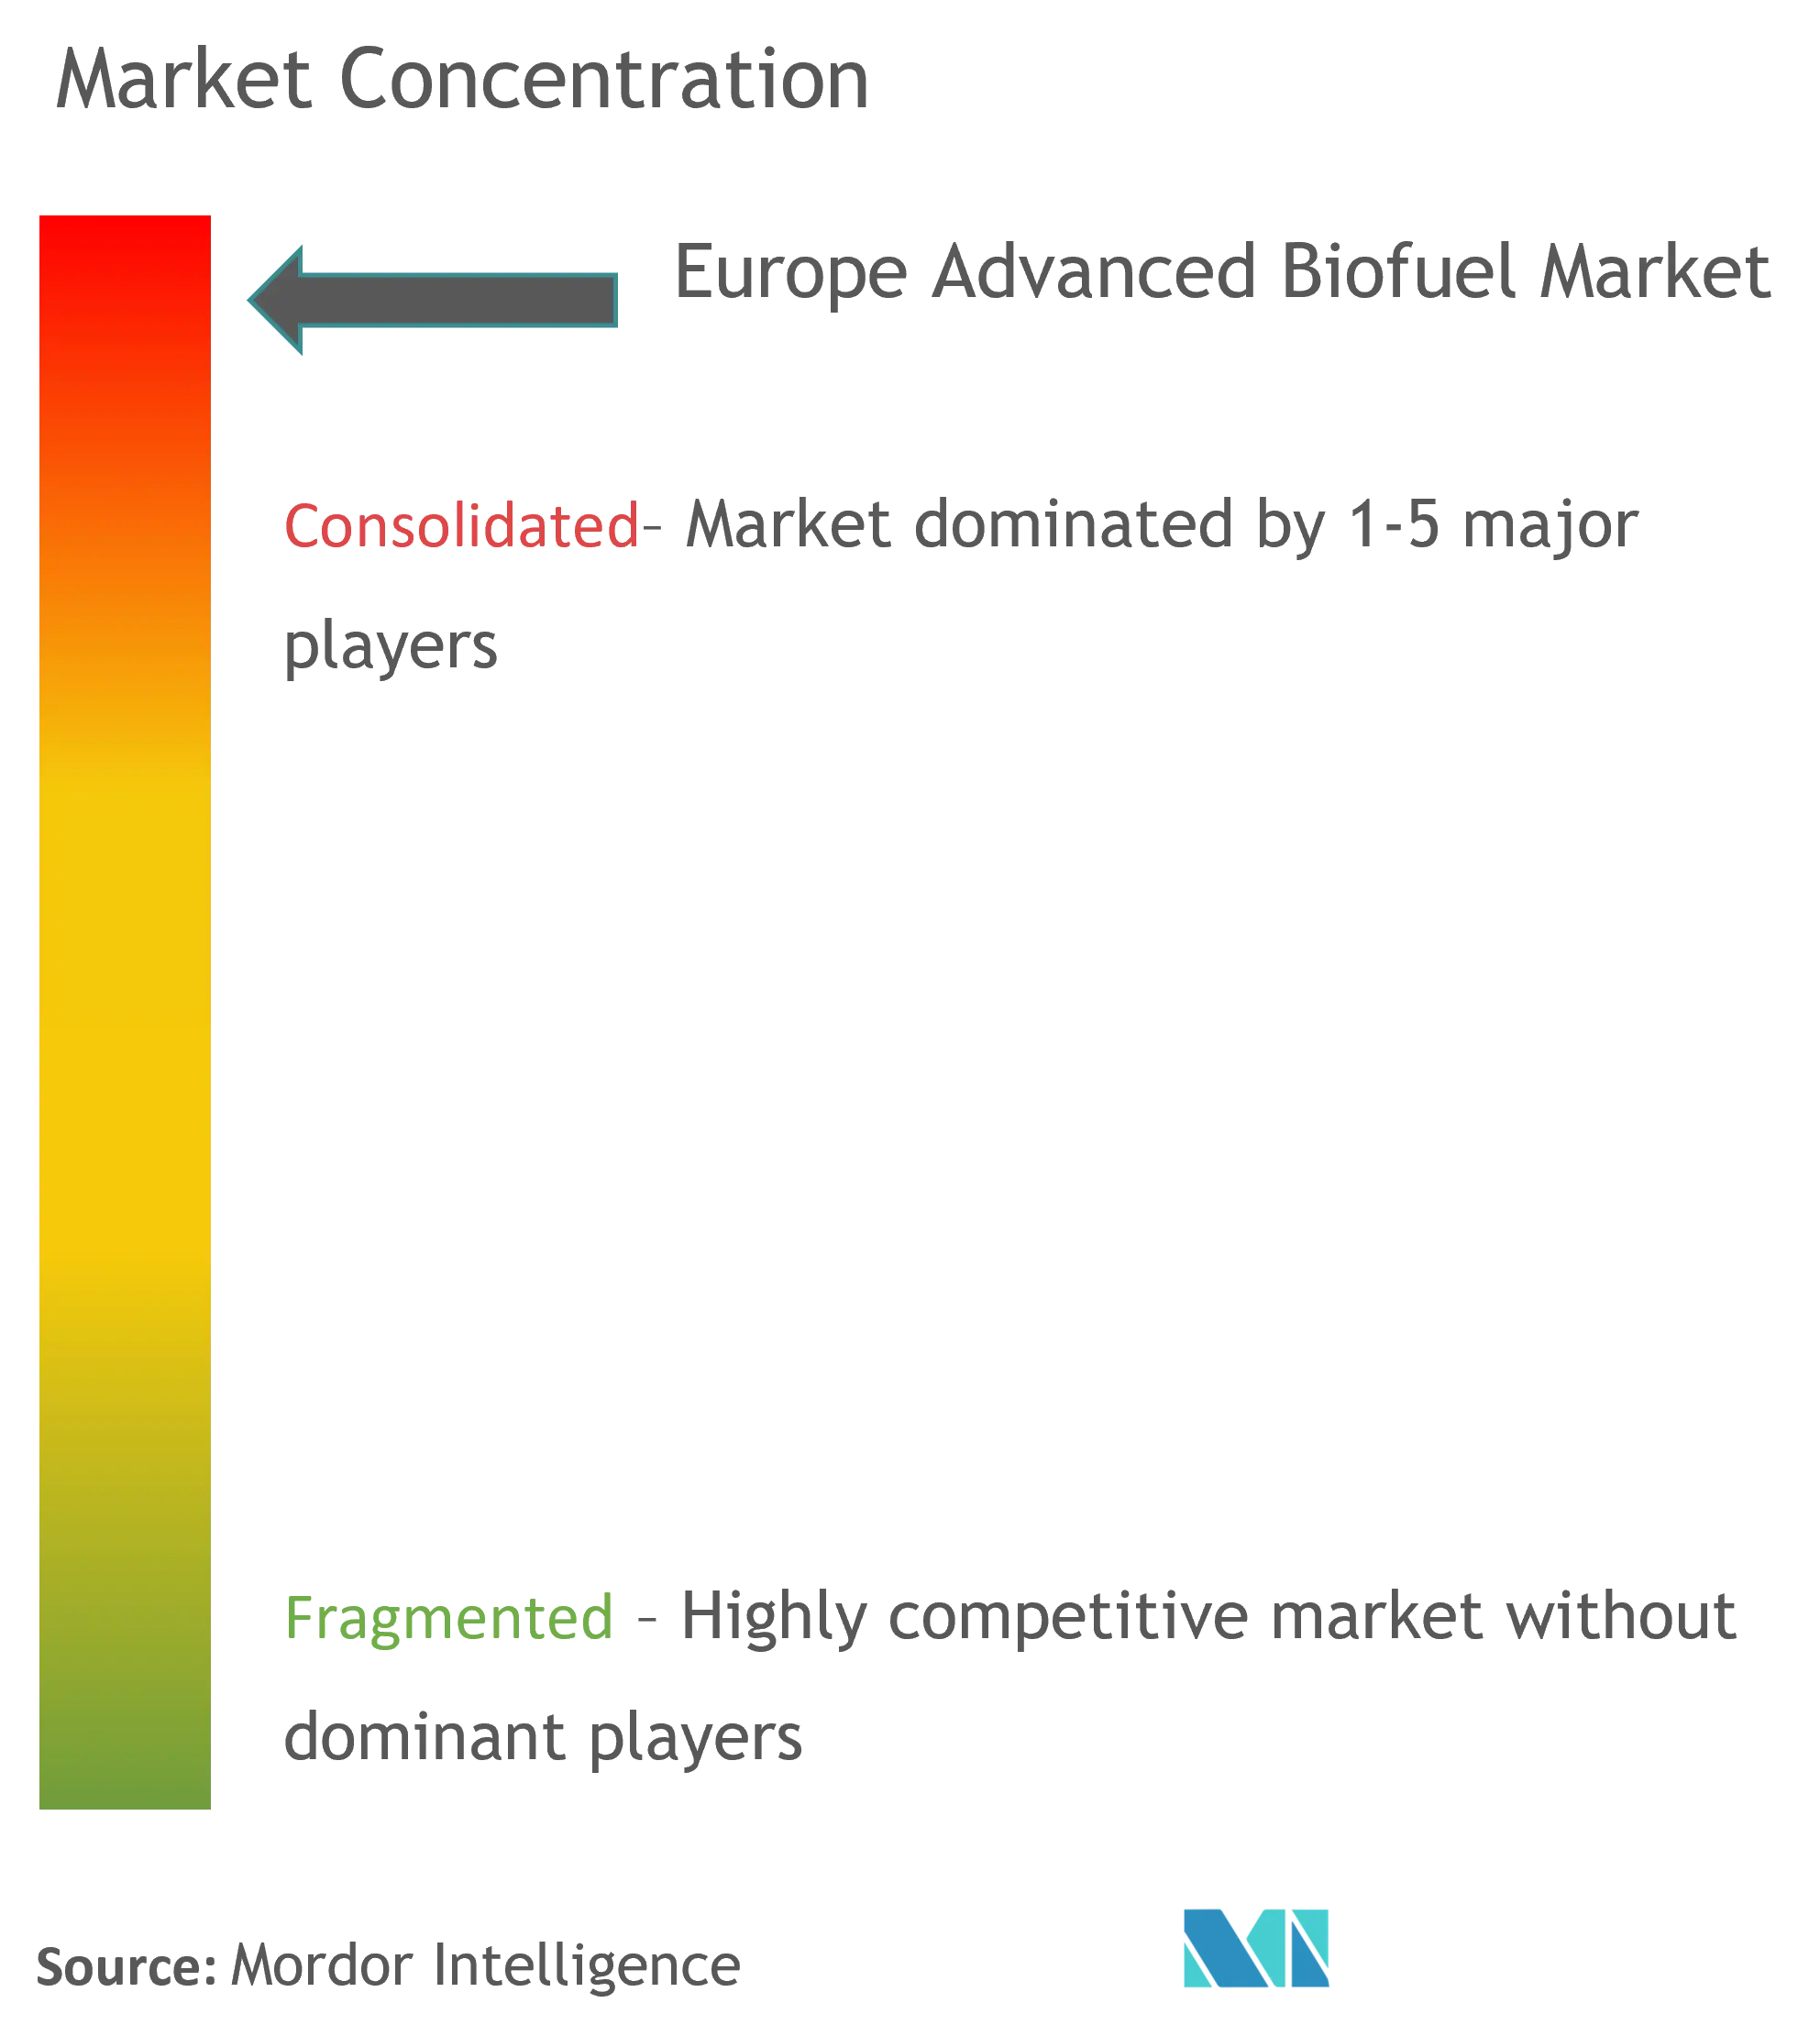 市場集中度 - 欧州の先進バイオ燃料市場.png